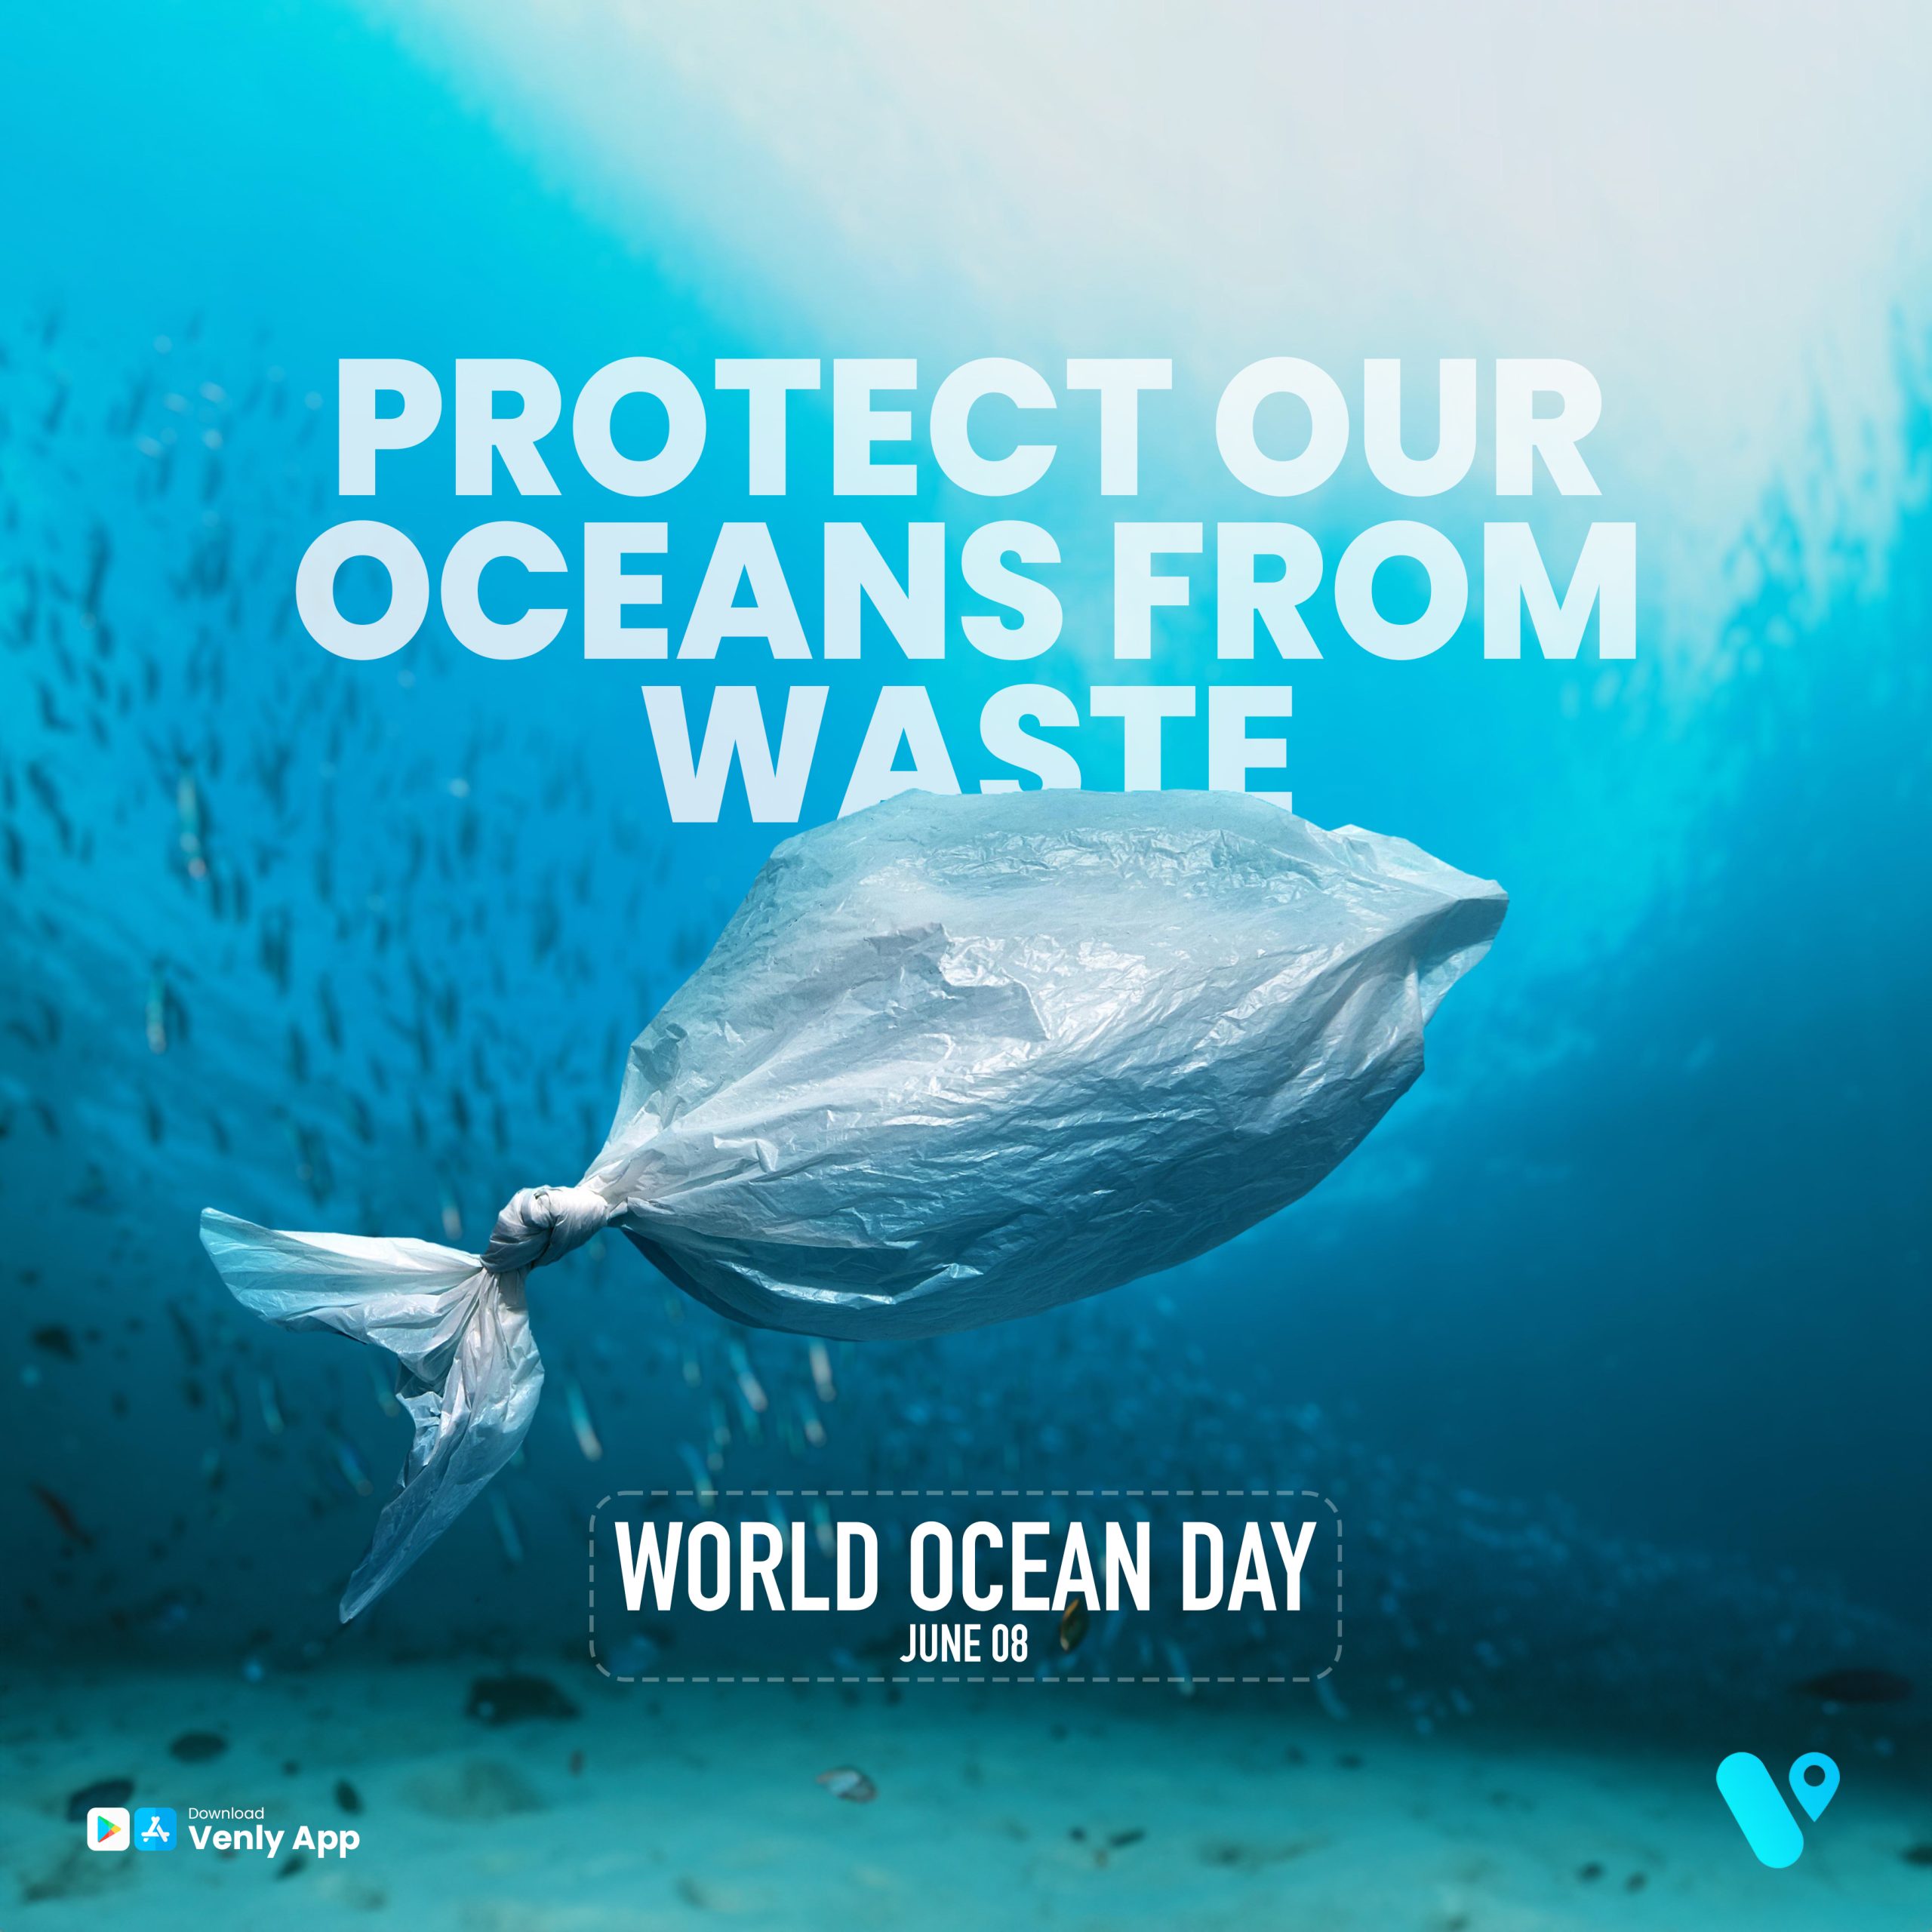 World Ocean Day: Safeguarding Qatar’s Marine Environment through your Actions